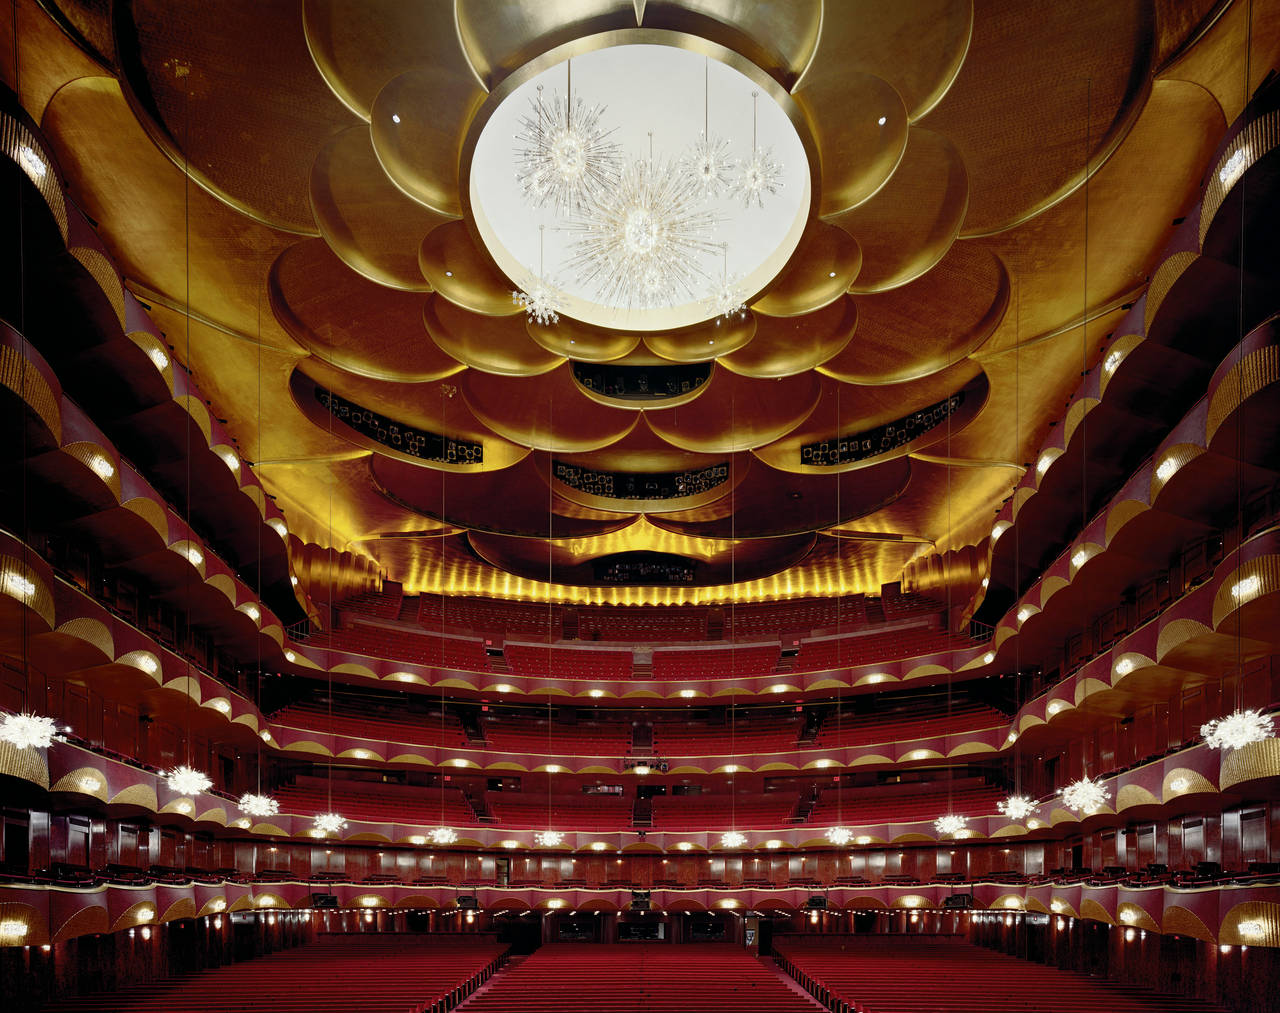 The Metropolitan Opera, New York, United States - Photograph by David Leventi